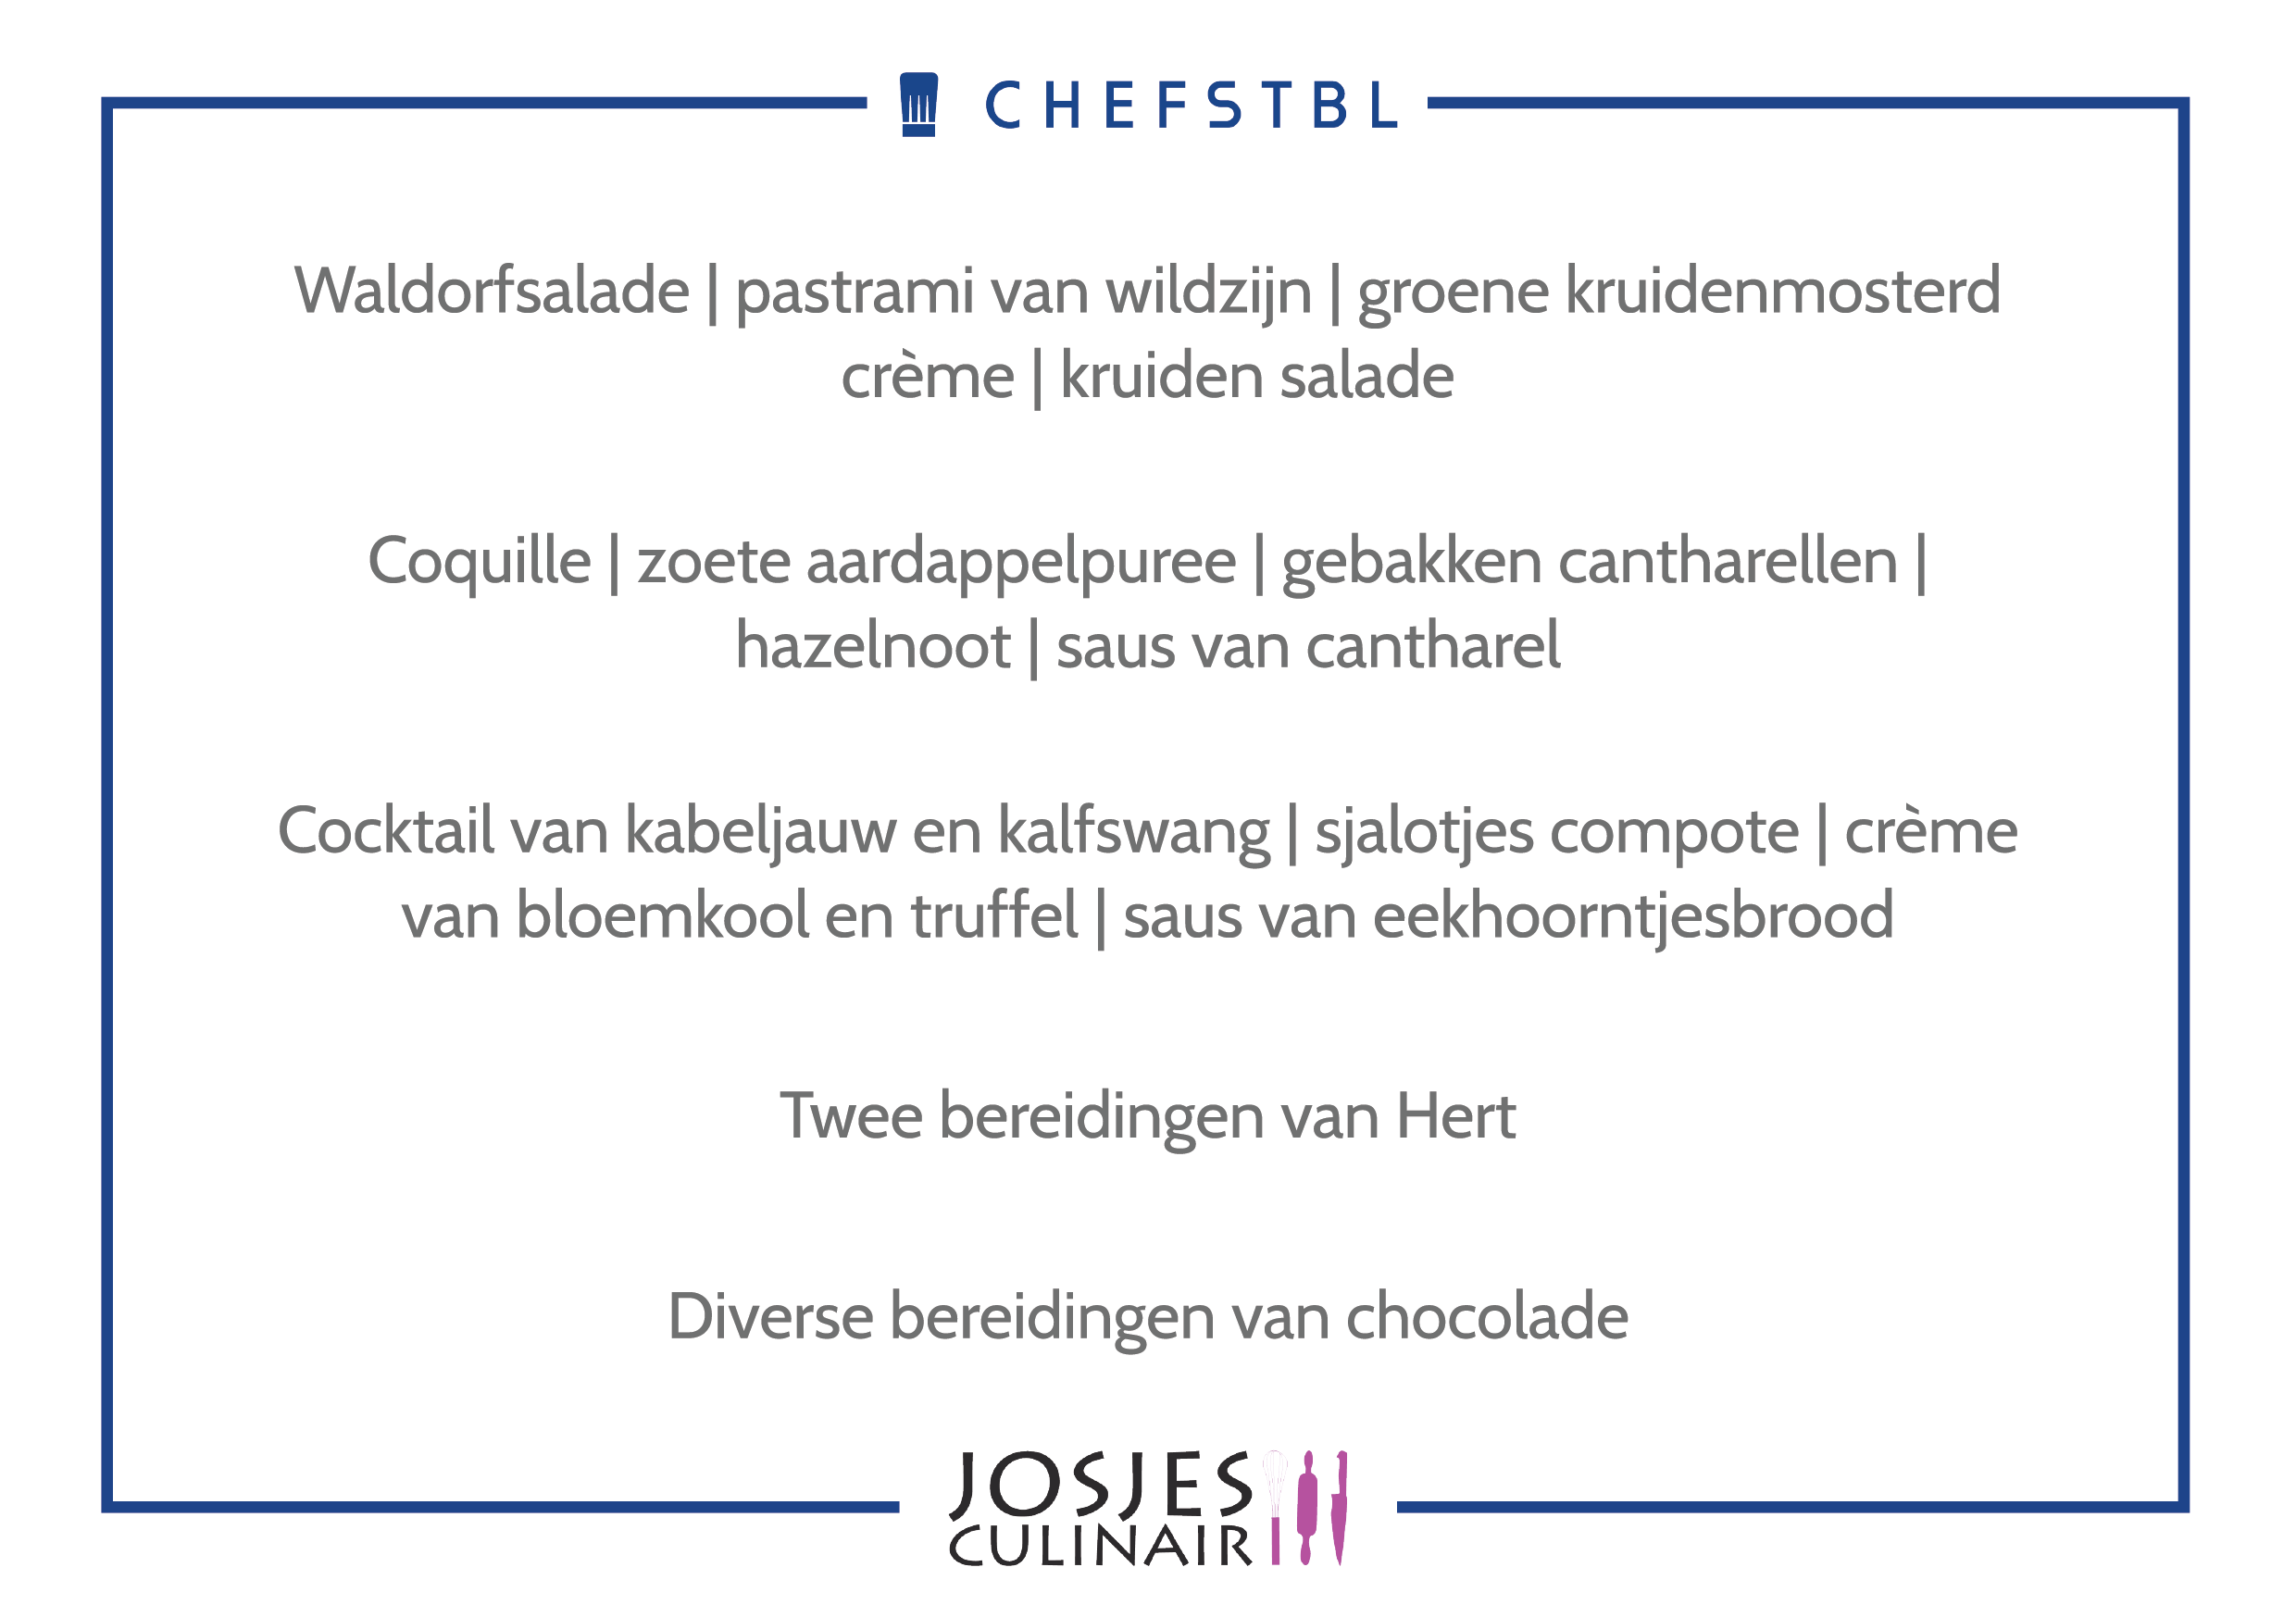 Voorbeeldmenu CHEFSTBL Josjes Culinair